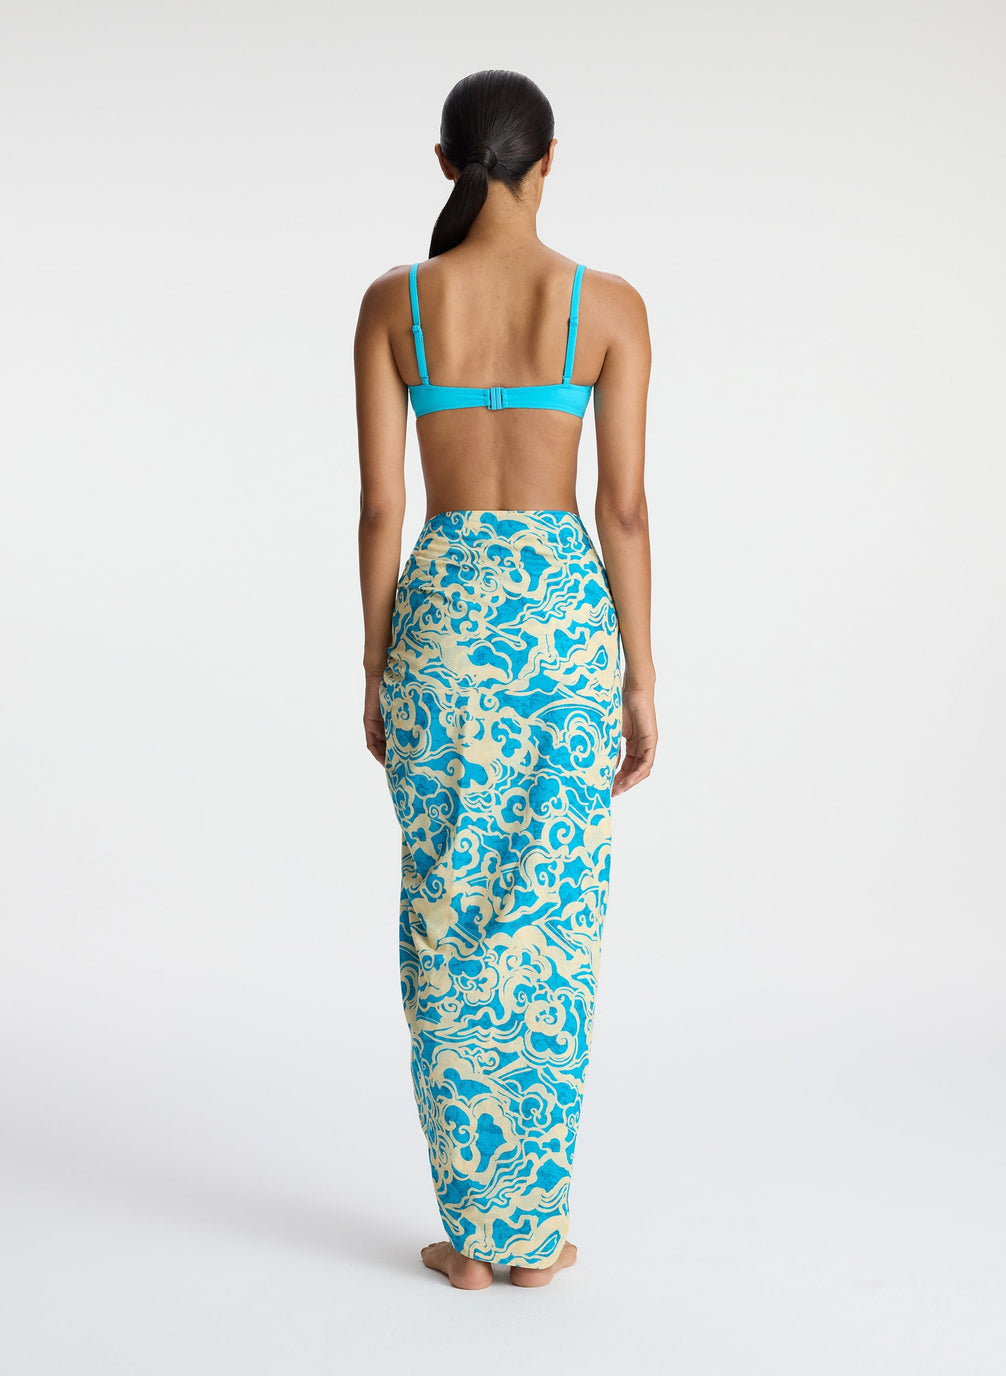 back view of woman wearing aqua bikini and aqua print sarong